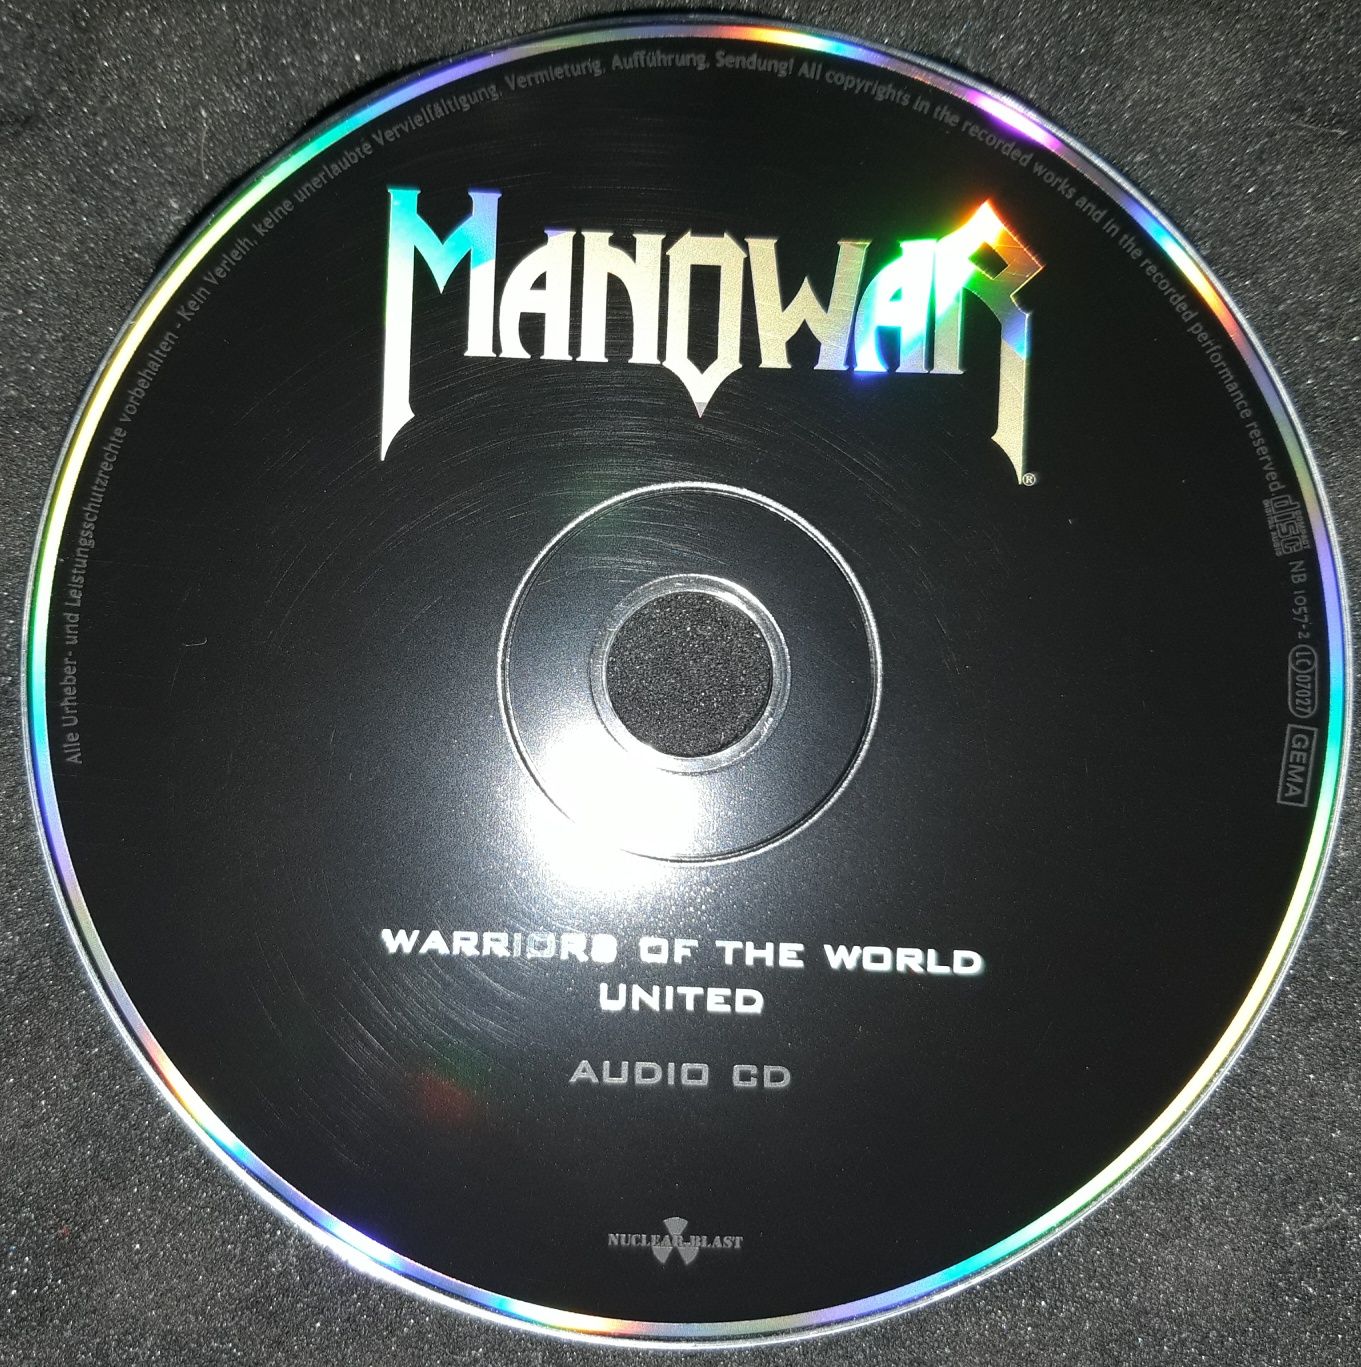 Manowar - Warriors Of The World United (DVD+CD, 2002)